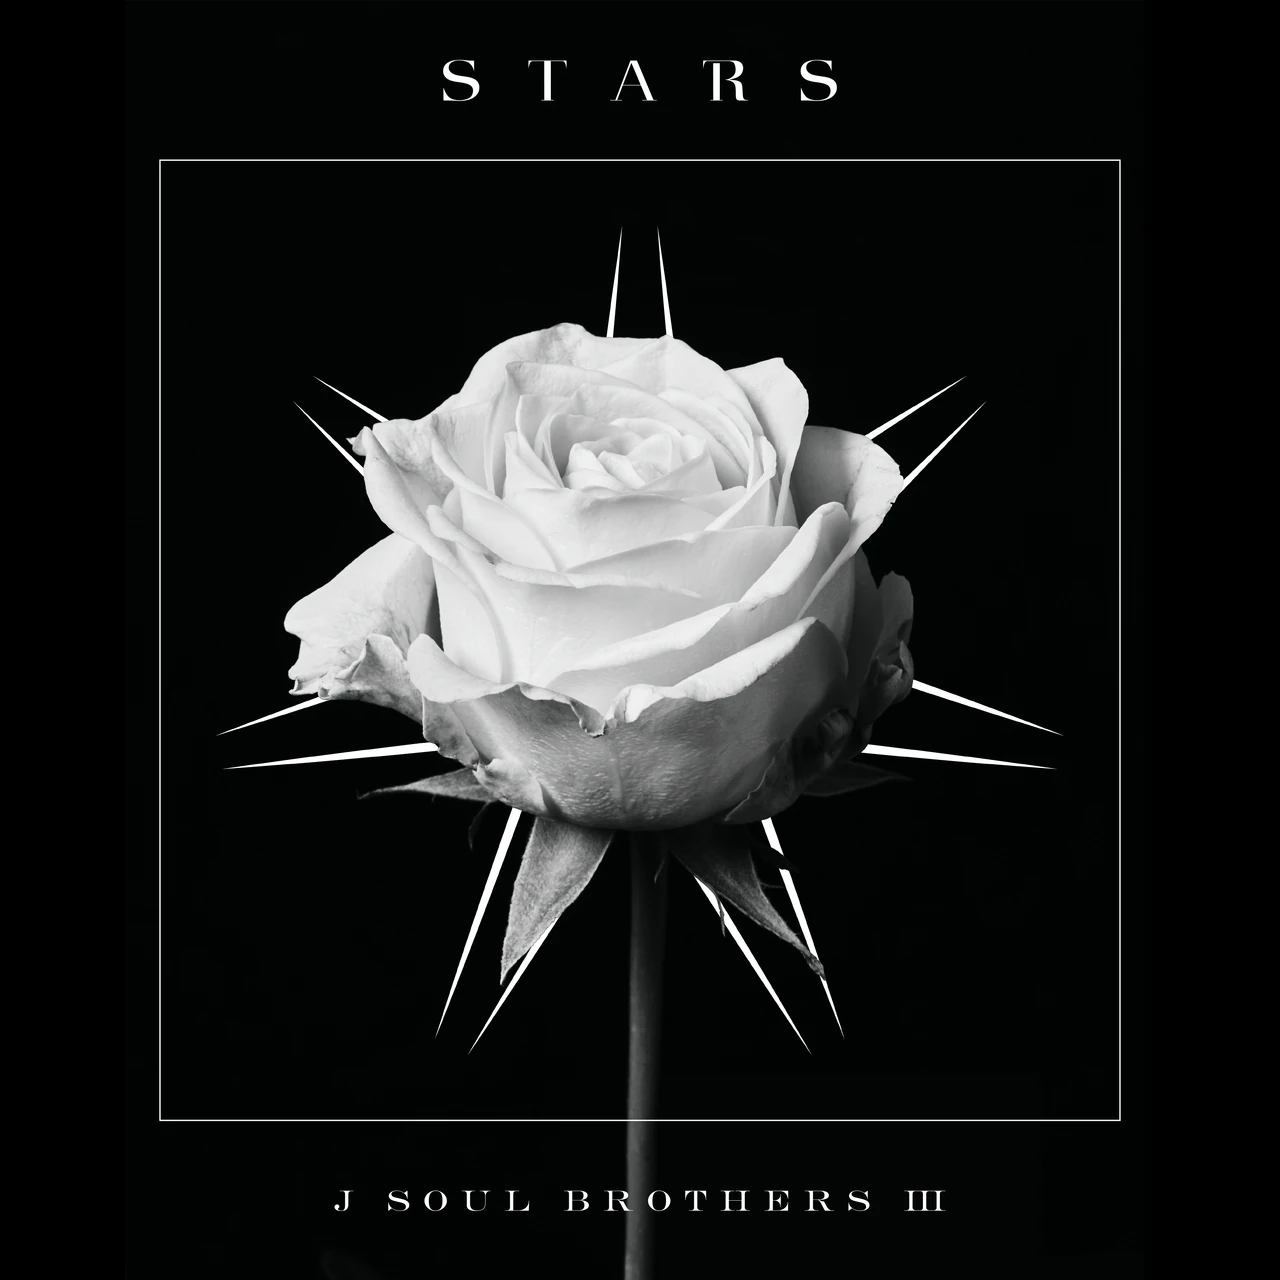 J SOUL BROTHERS III STARS cover artwork